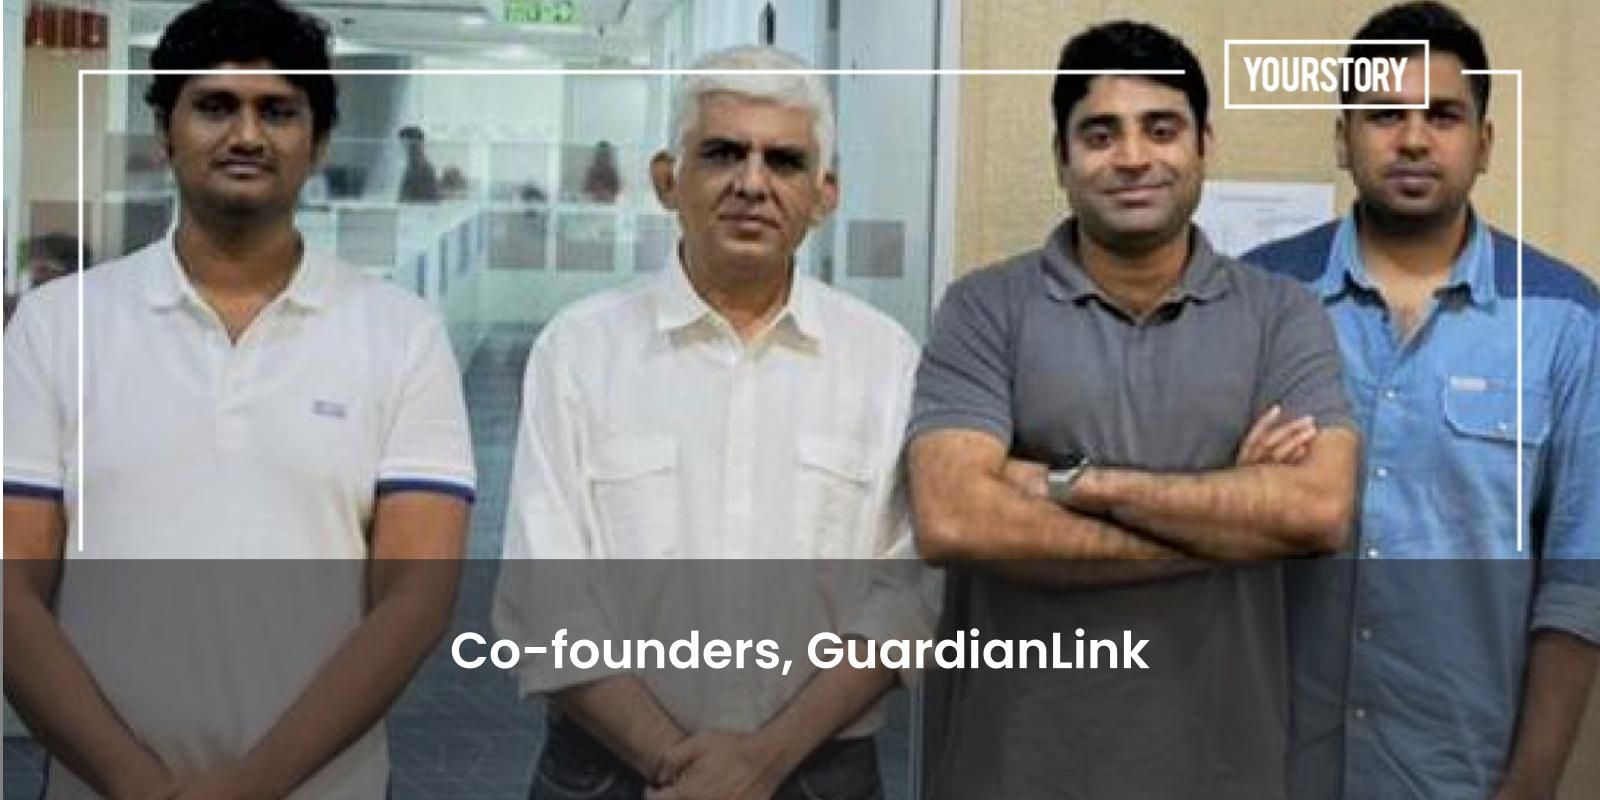 [Funding alert] NFT startup GuardianLink raises $12M in Series A led by Kalaari Capital